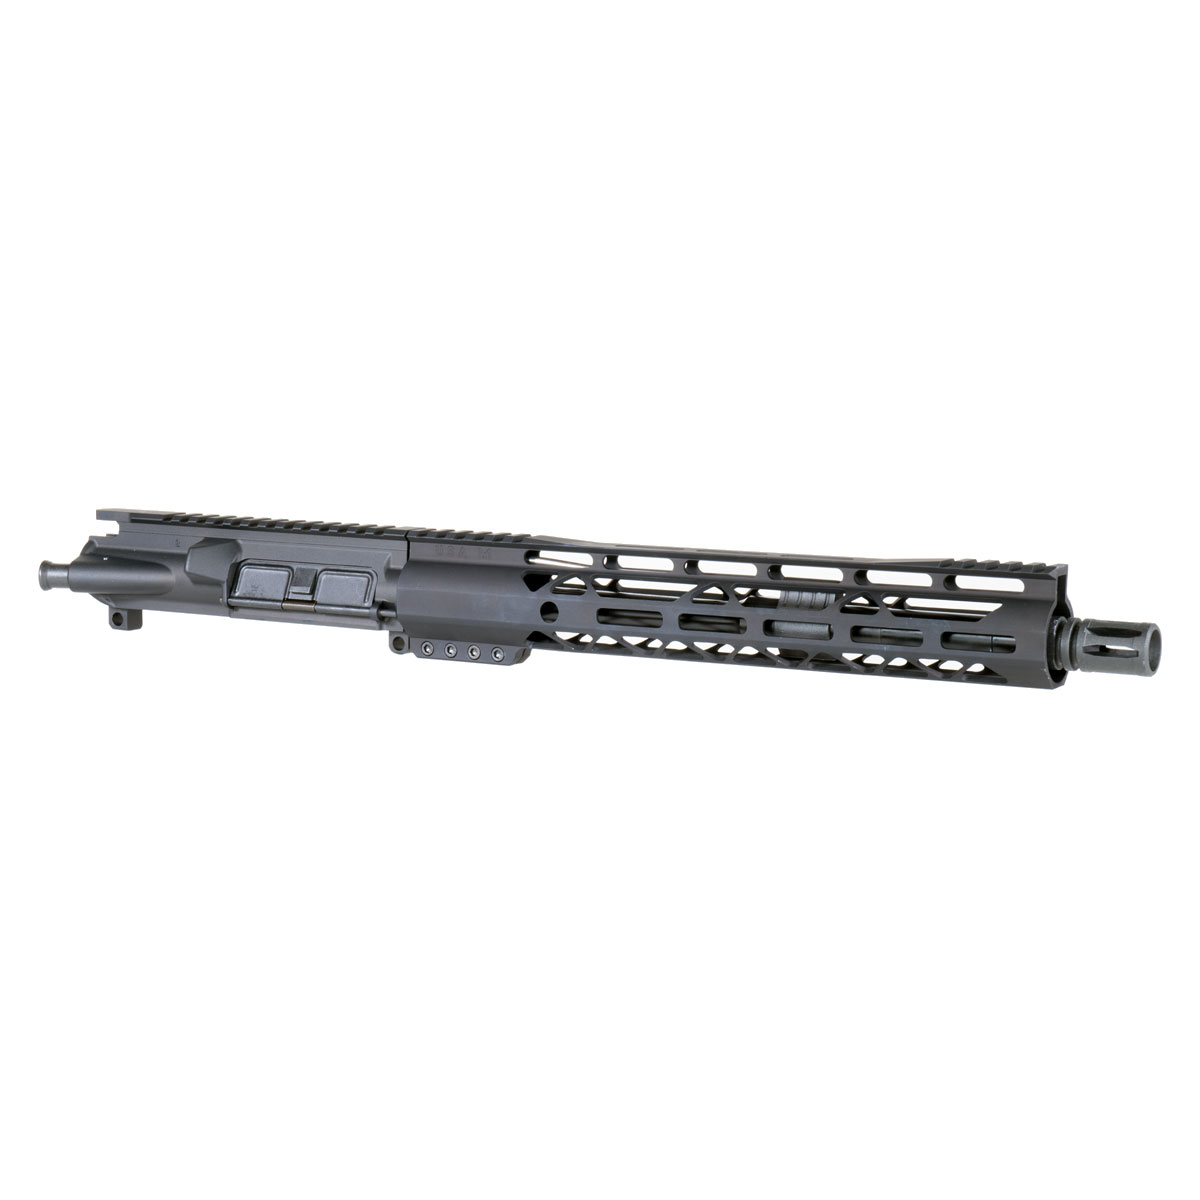 Davidson Defense 'Reckoner' 12.5-inch AR-15 5.56 NATO QPQ Nitride Pistol Upper Build Kit